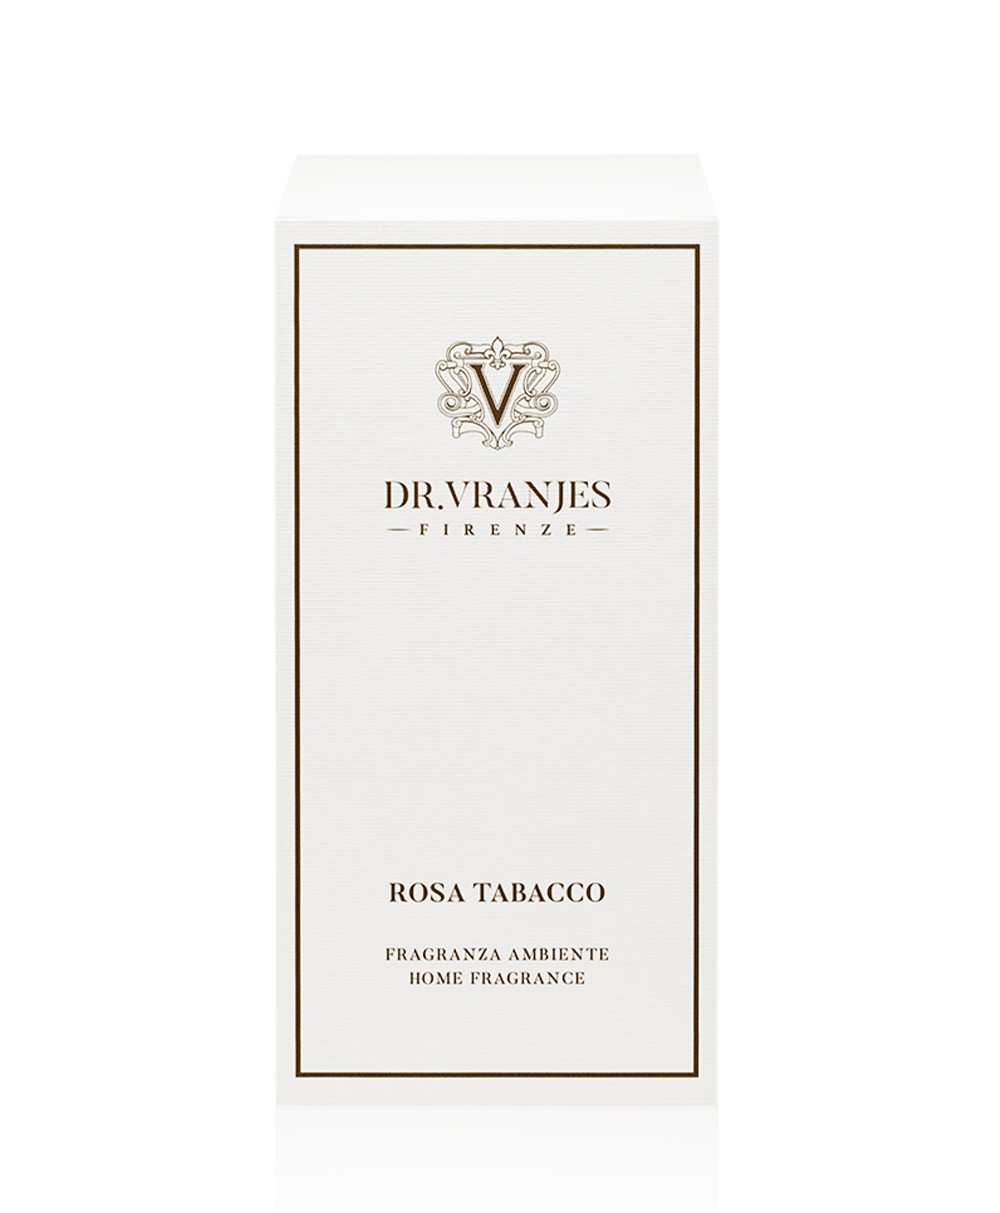 Rosa Tabacco Diffuser Verpackung aus der Home Fragrance Collection von Dr. Vranjes Firenze im RAUM Conceptstore